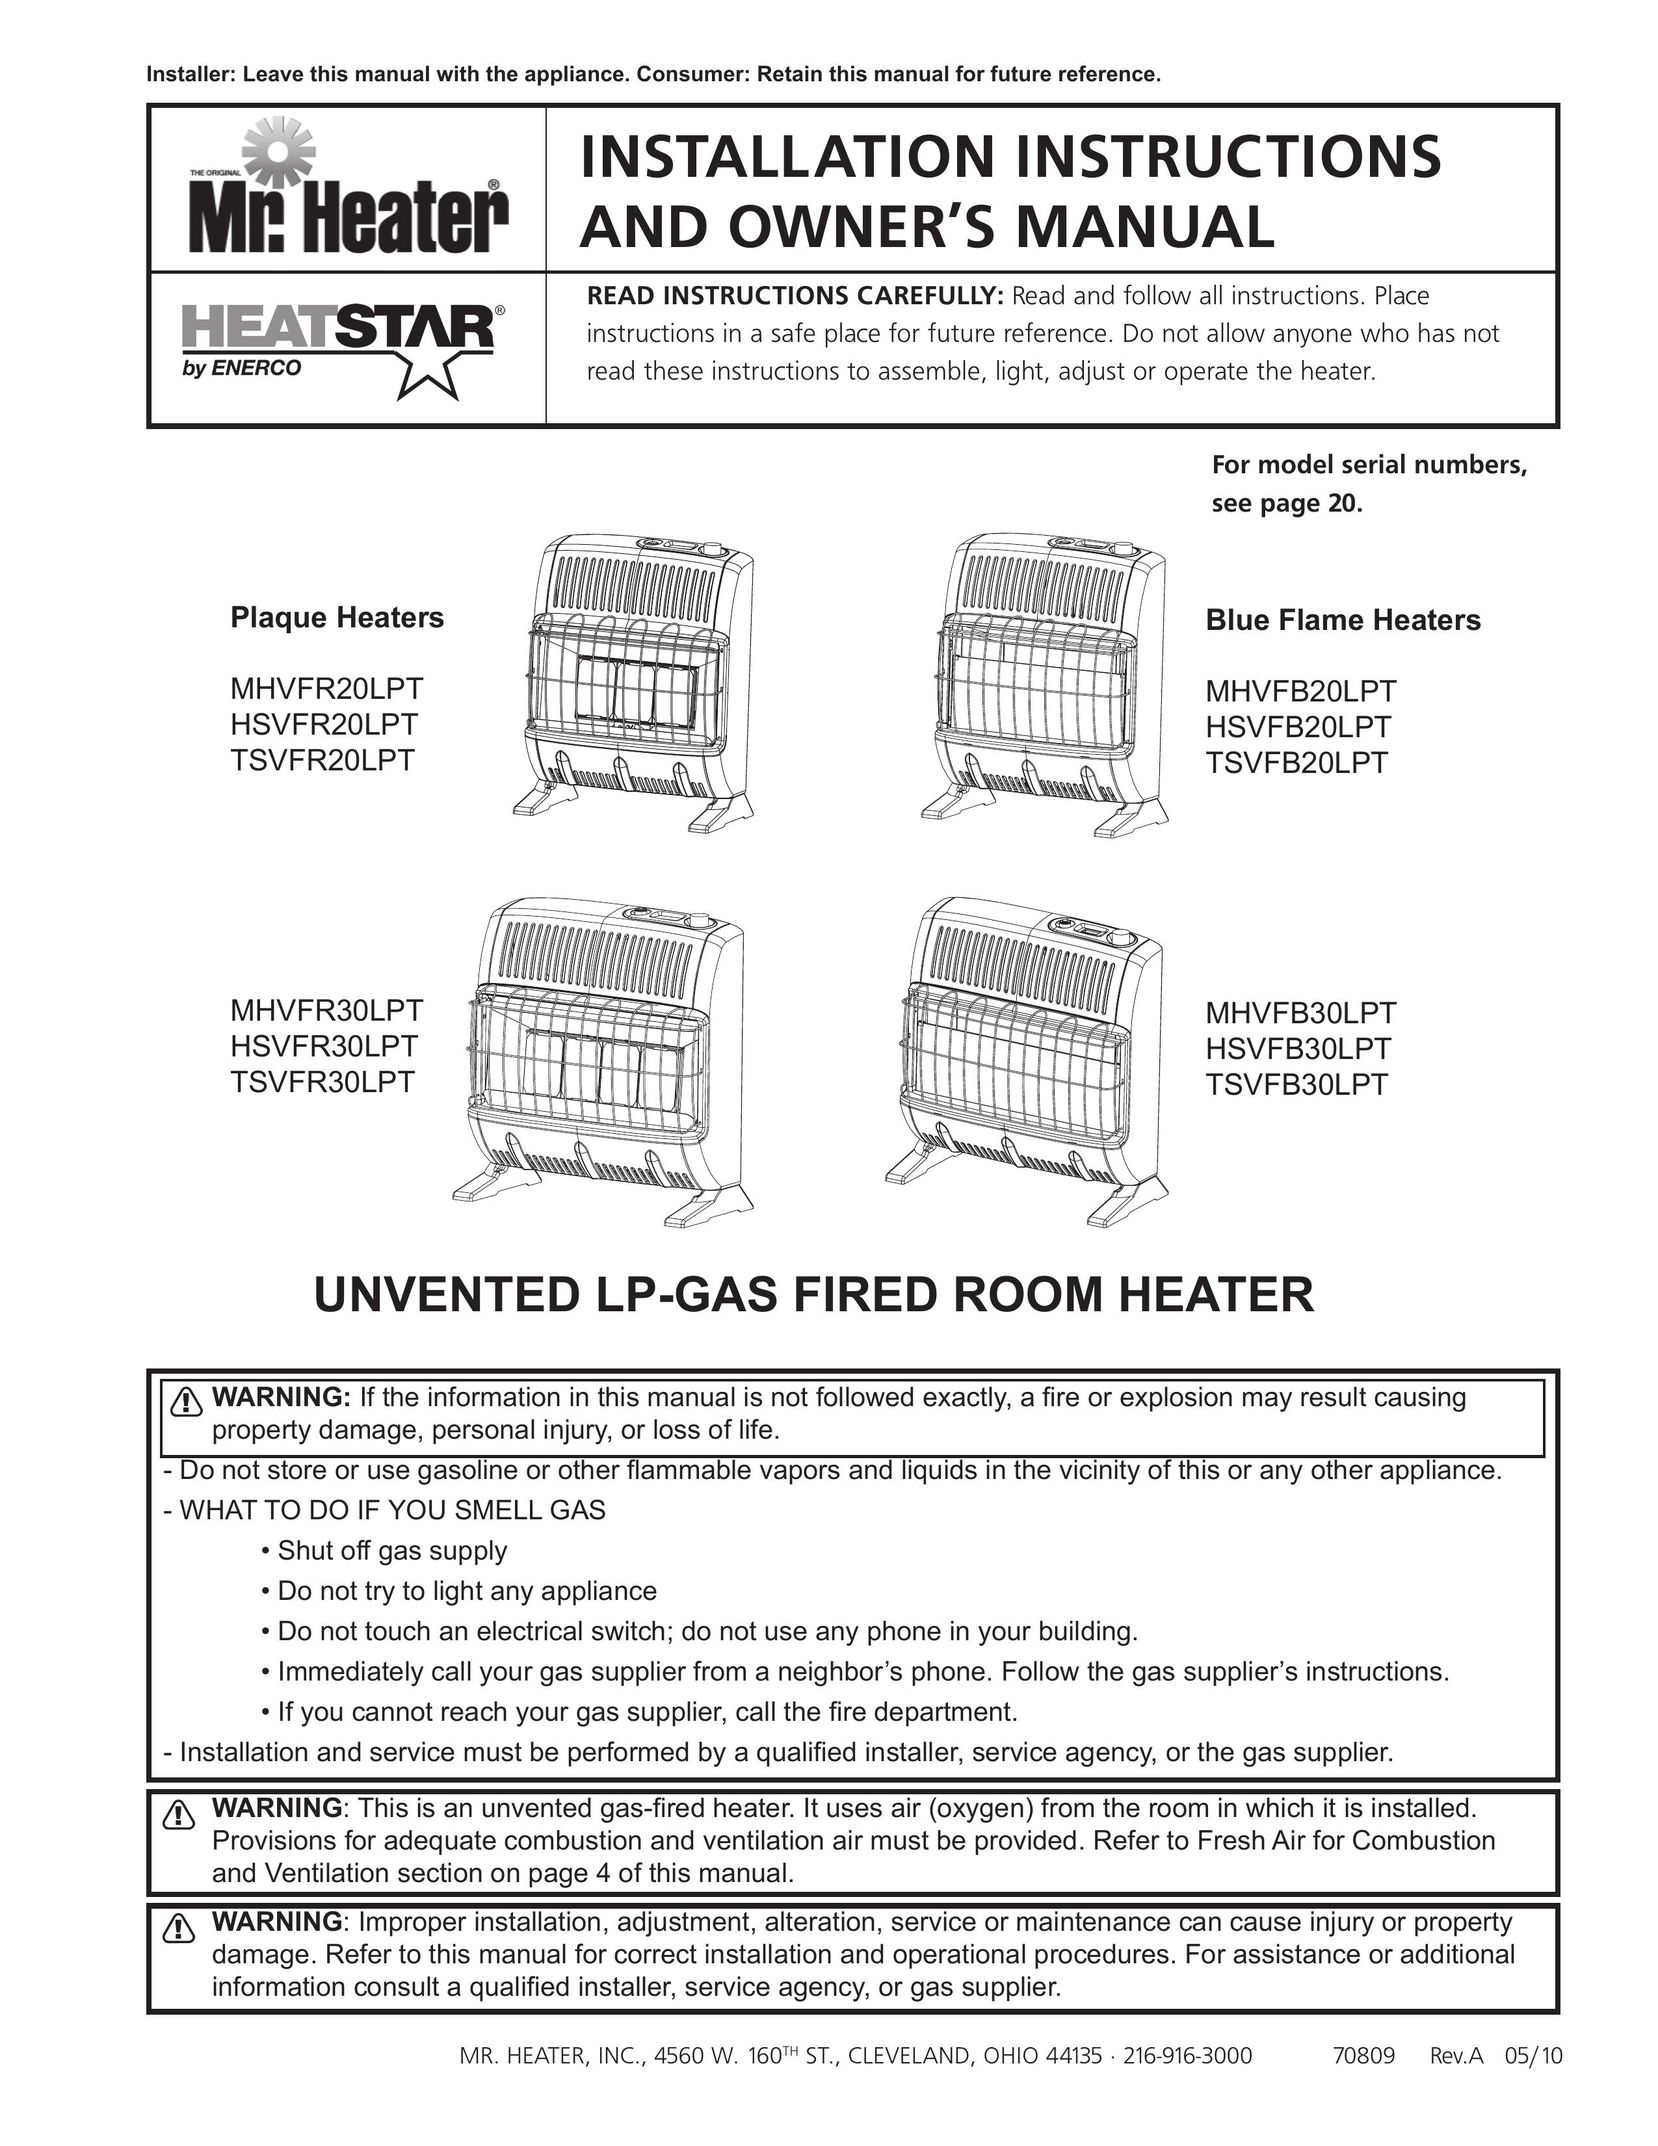 Enerco HSVFB20LPT Gas Heater User Manual